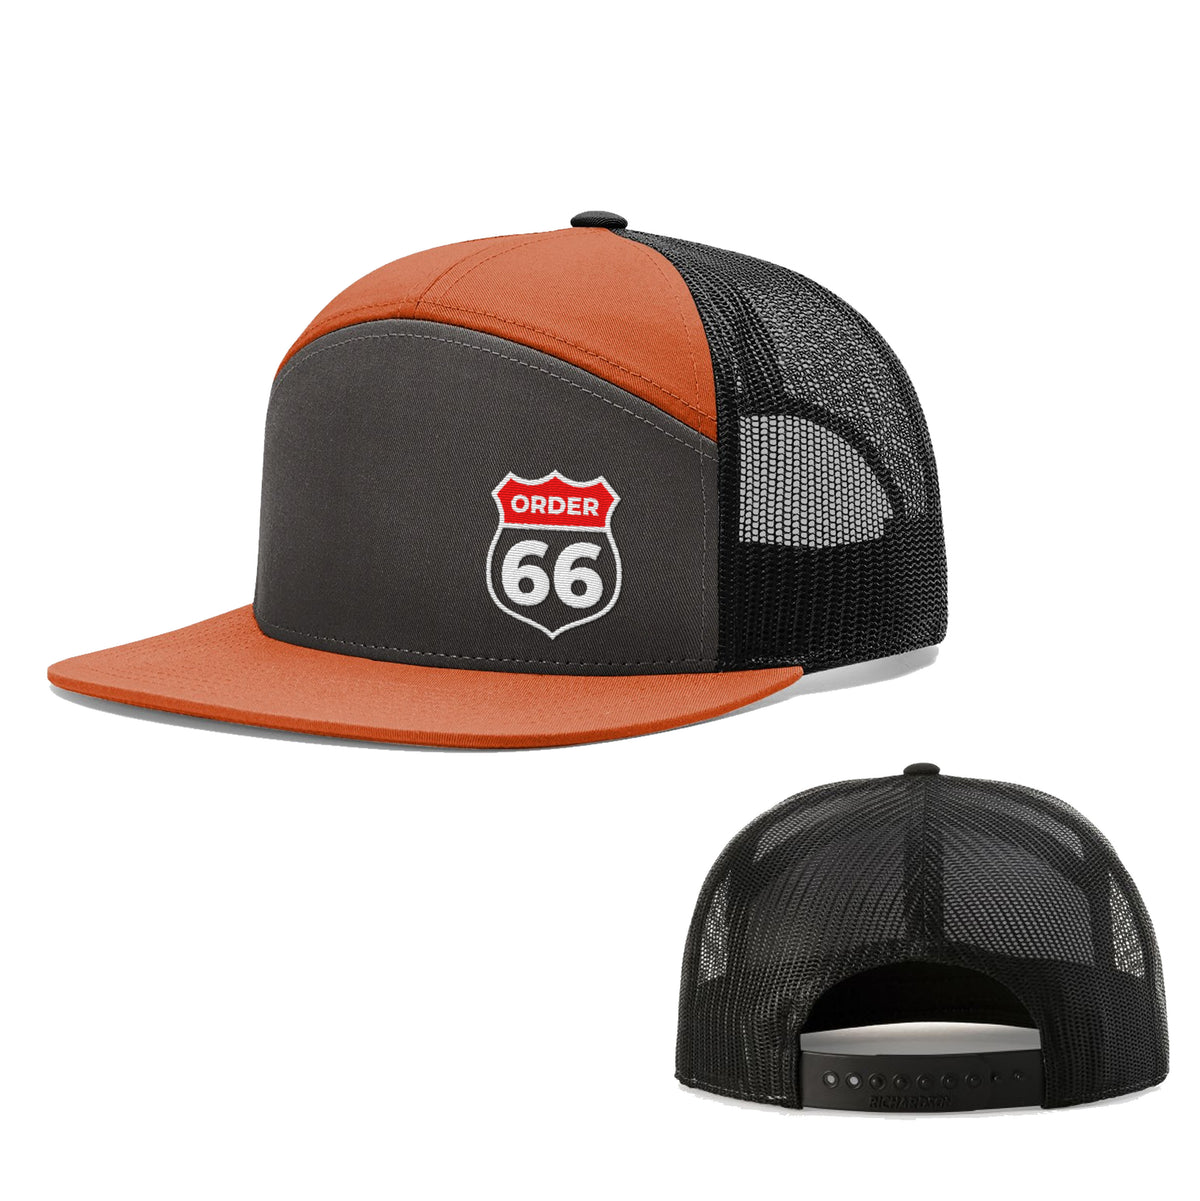 Order 66 7 Panel Hats